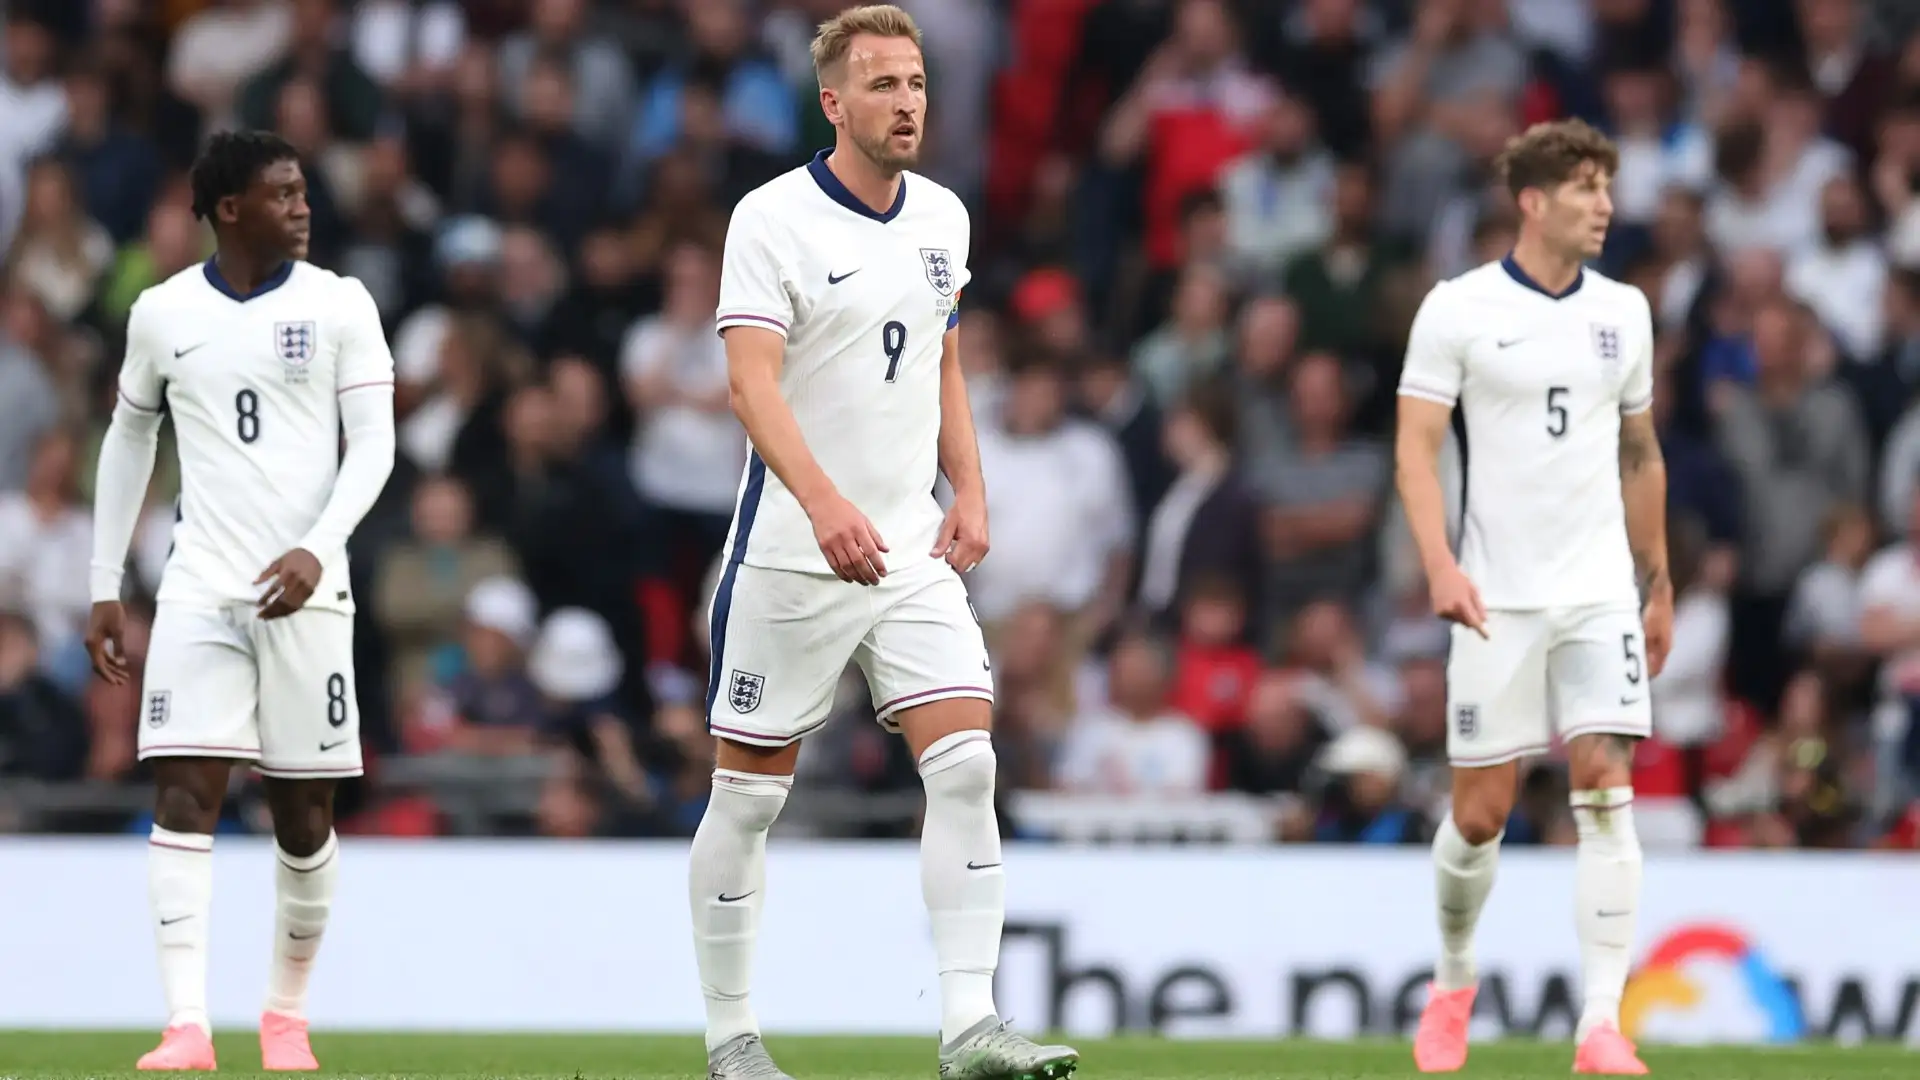 Inghilterra sconfitta dall'Islanda a Wembley, i tifosi rumoreggiano